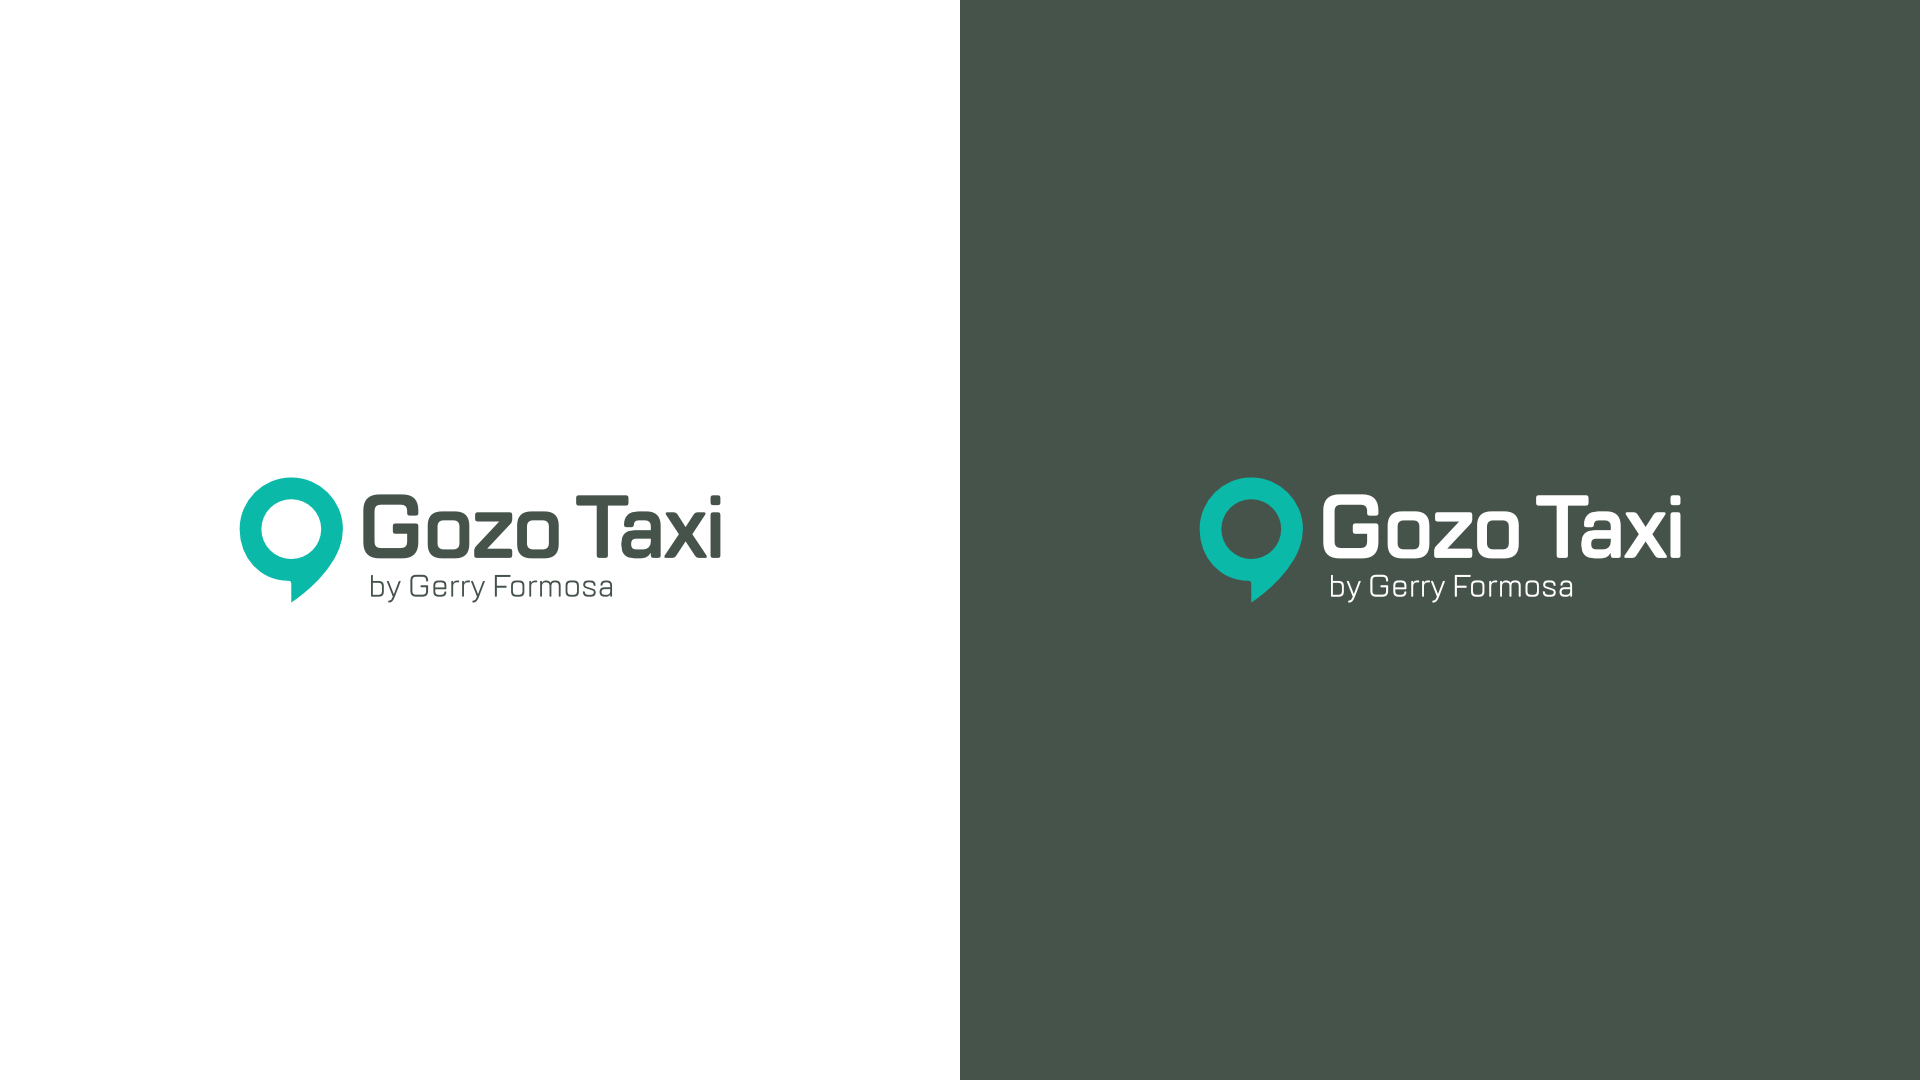 Gozo Taxi branding